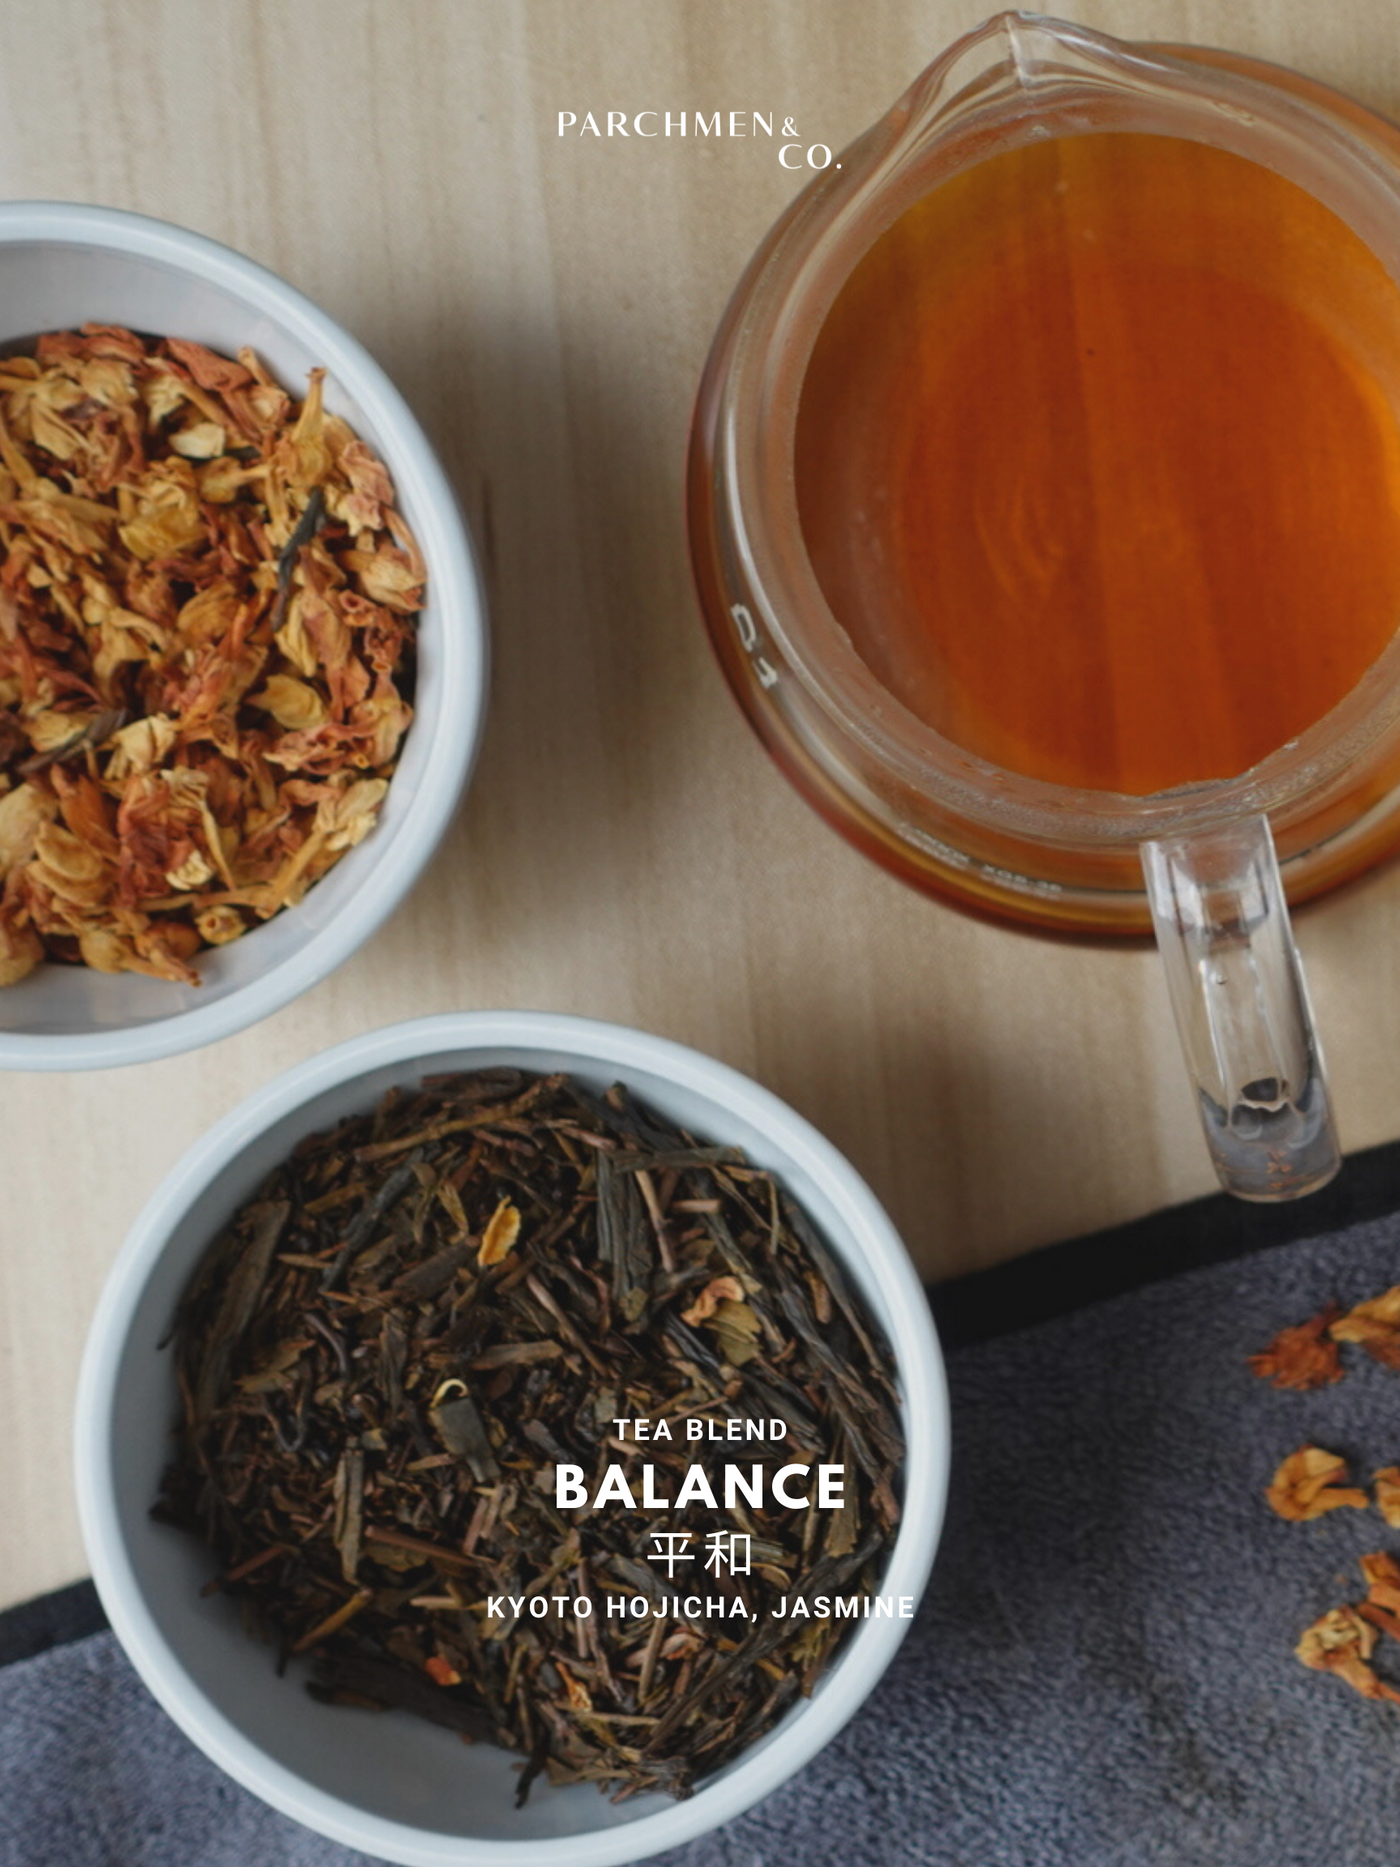 Balance | 平和 - Tea Blend focusing on Kyoto Hojicha